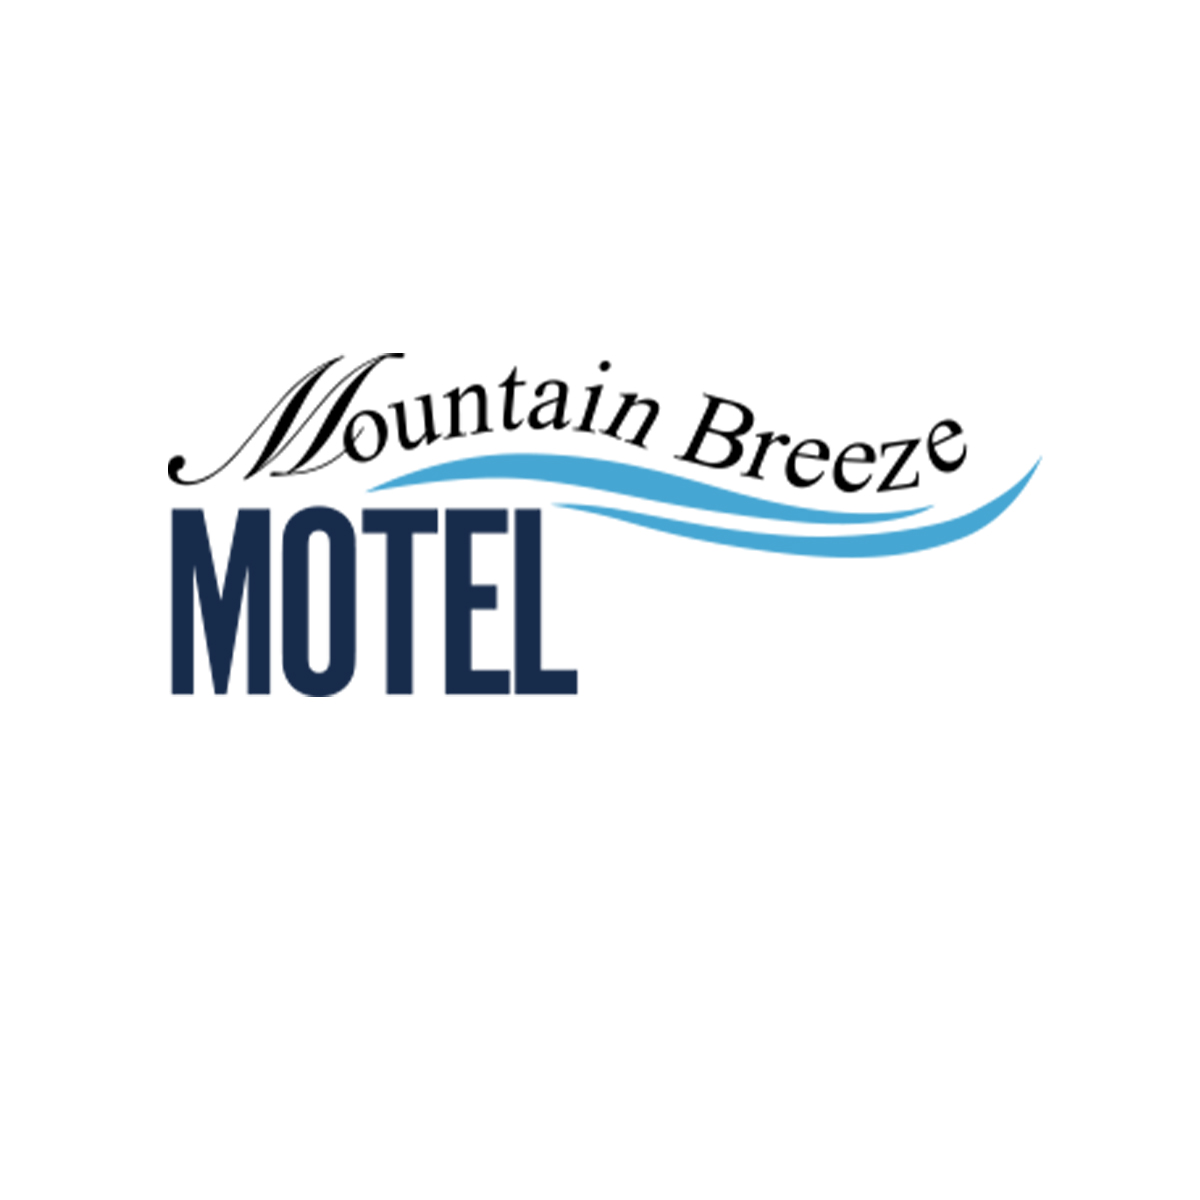 Mountain Breeze Motel 2019 SMCB Logo.jpg